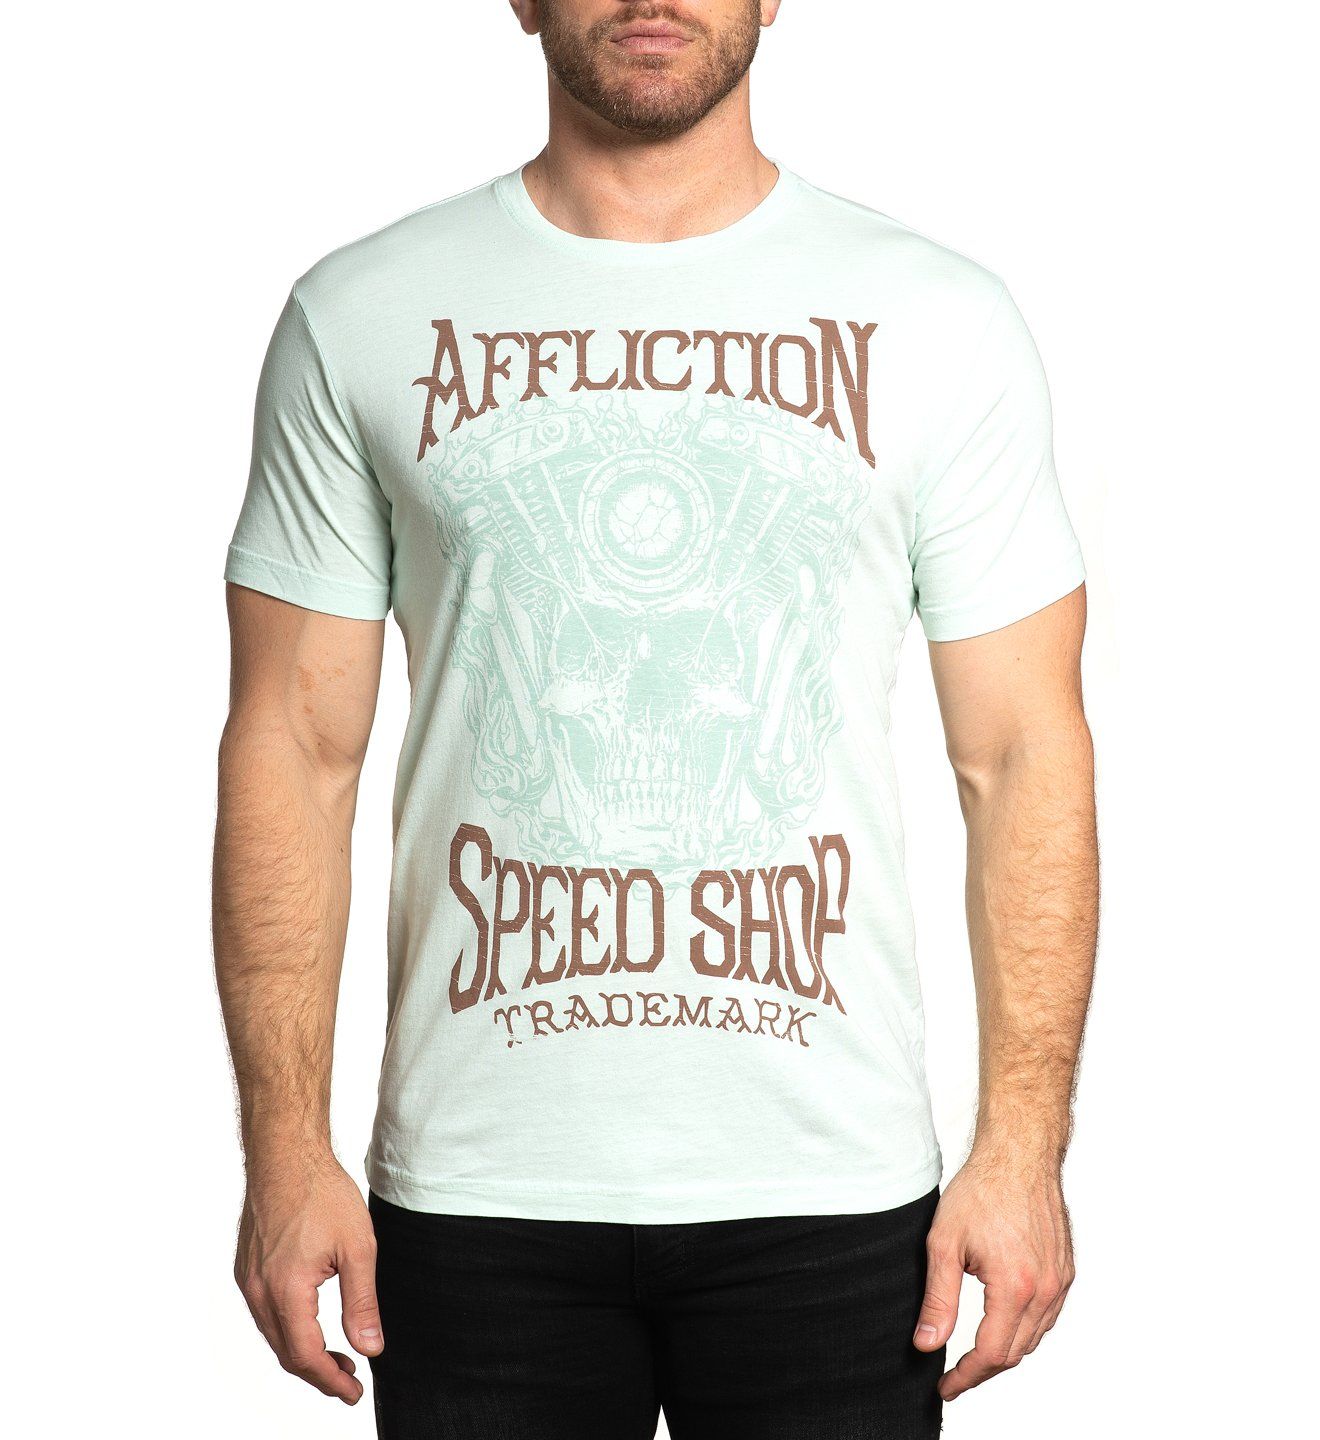 Motor Head Speed Shop - Affliction Clothing